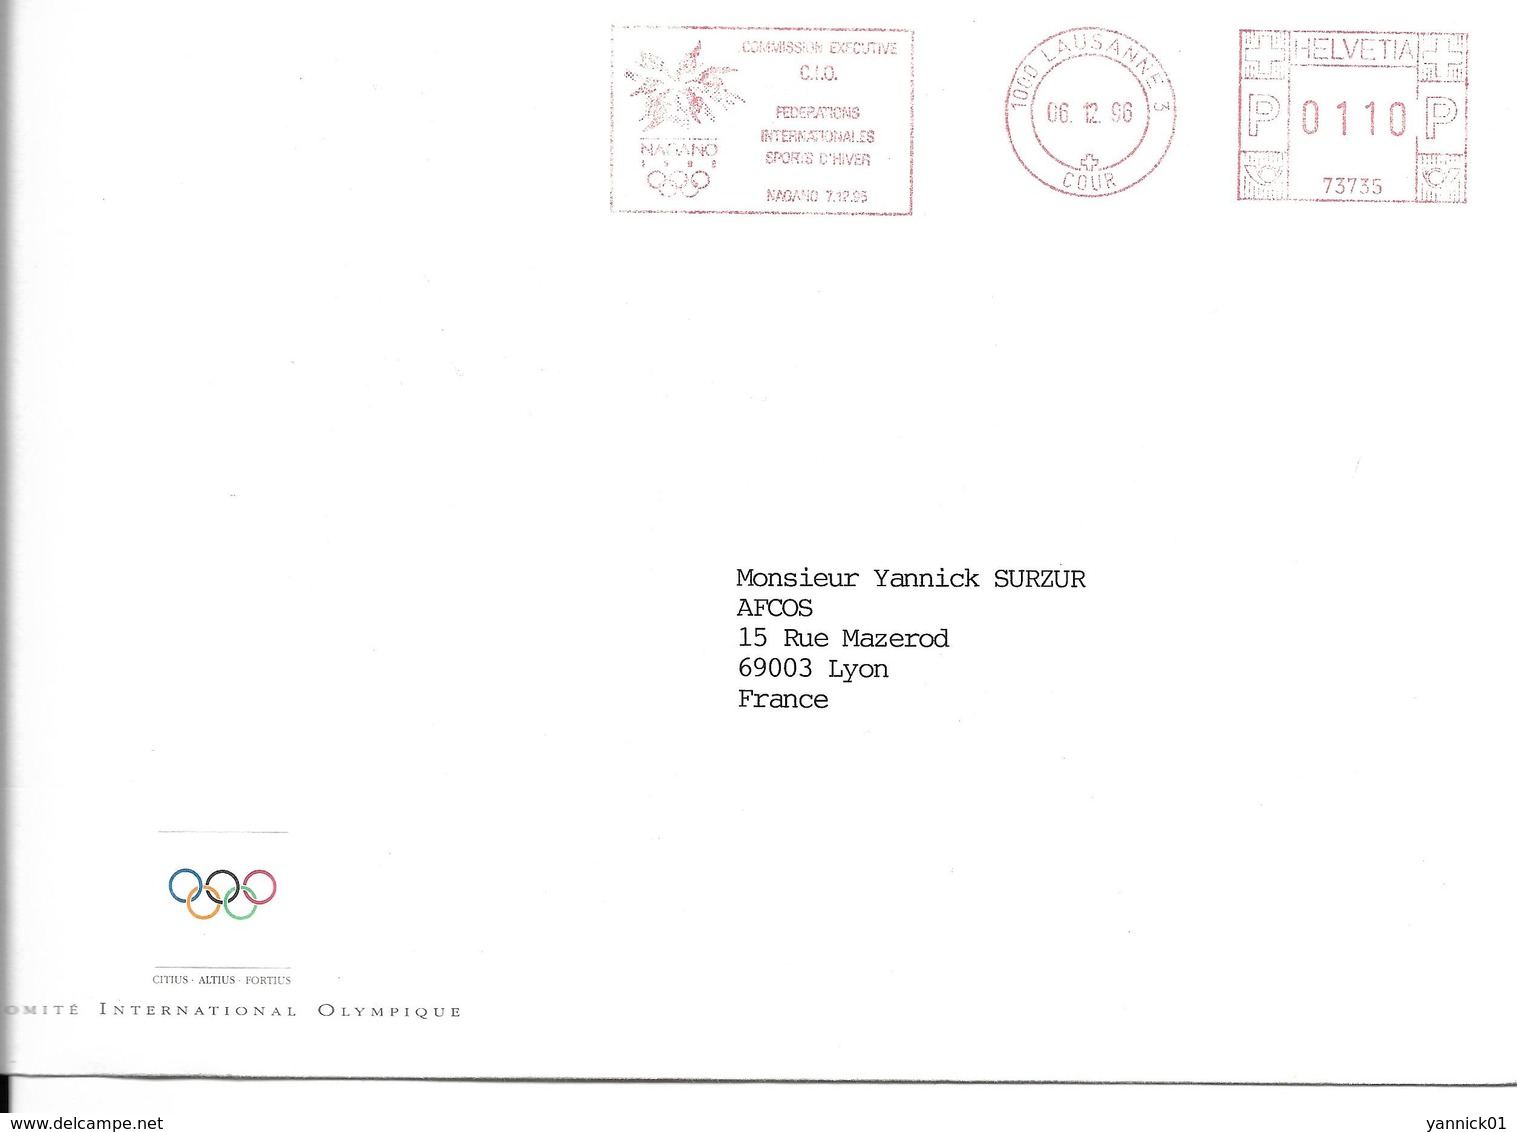 JEUX OLYMPIQUES HIVER - OLYMPICS WINTER GAMES NAGANO 1998 - CIO COMMISION EXECUTIVE - Hiver 1998: Nagano